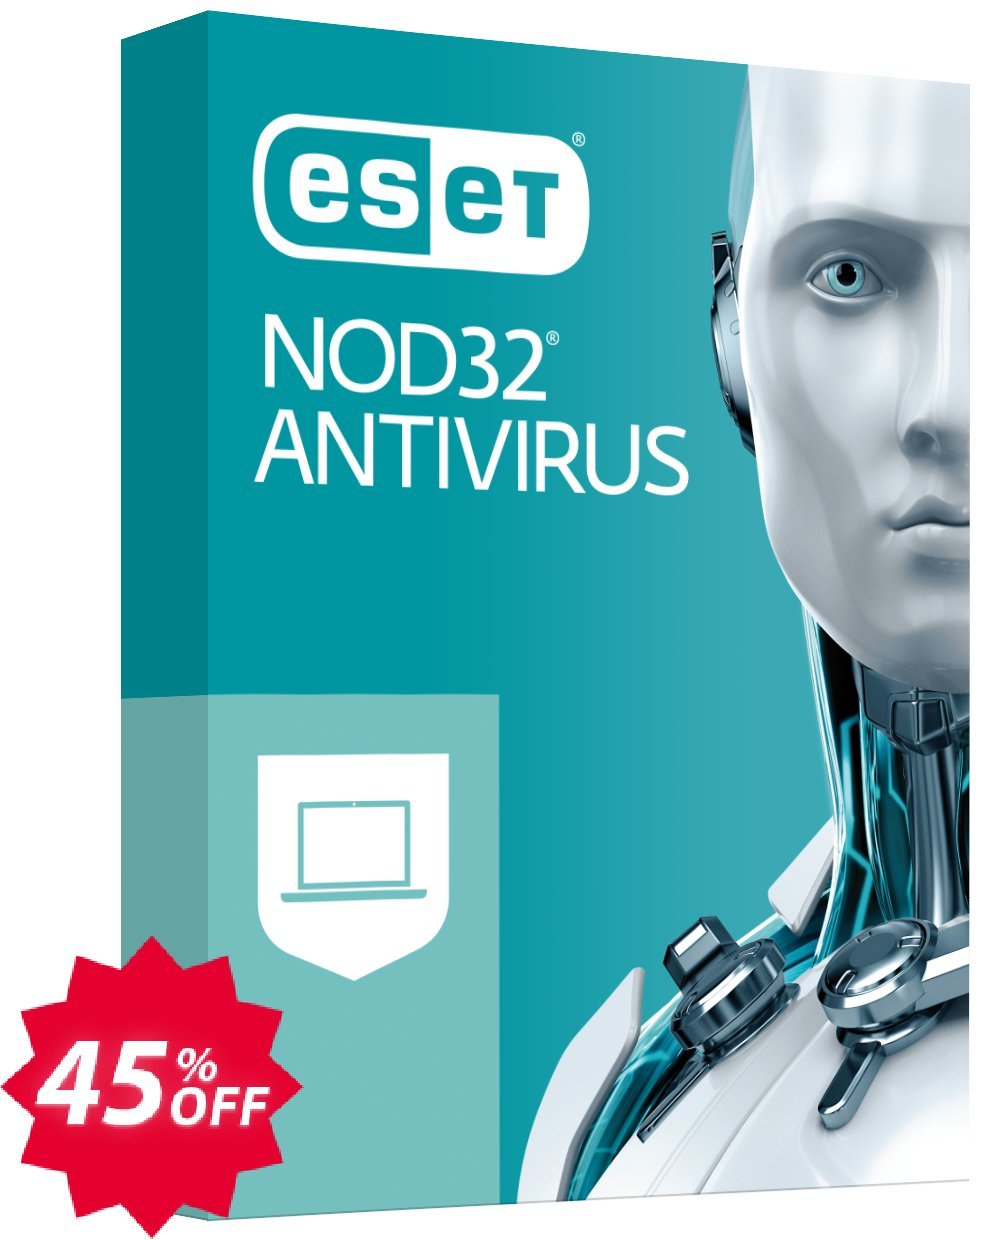 ESET NOD32 Antivirus - Renew 2 Years 5 Devices Coupon code 45% discount 